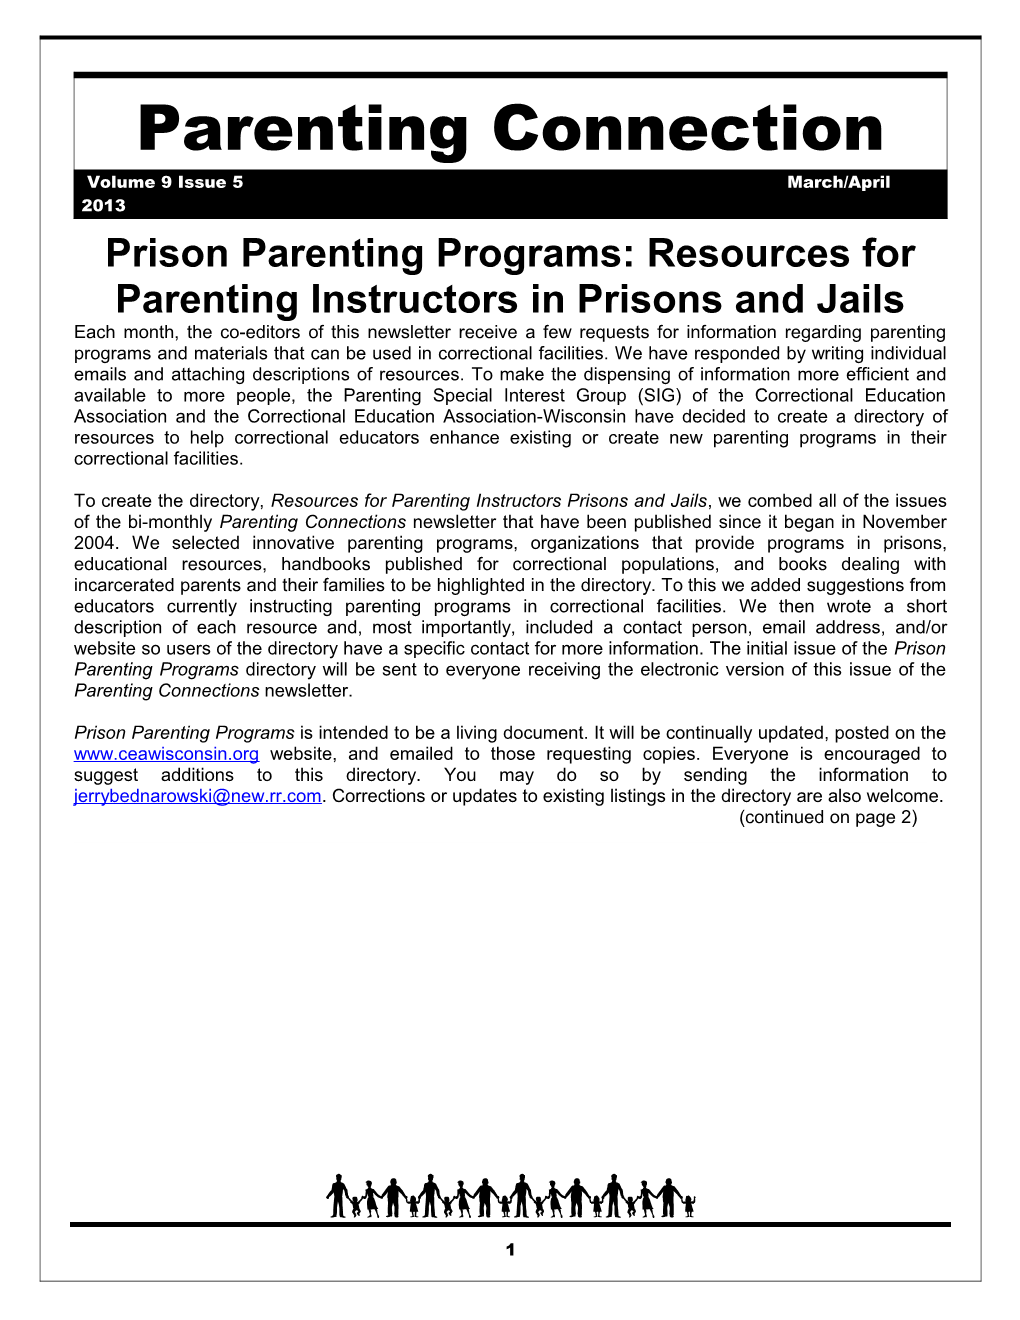 Prison Parenting Programs: Resources for Parenting Instructors in Prisons and Jails